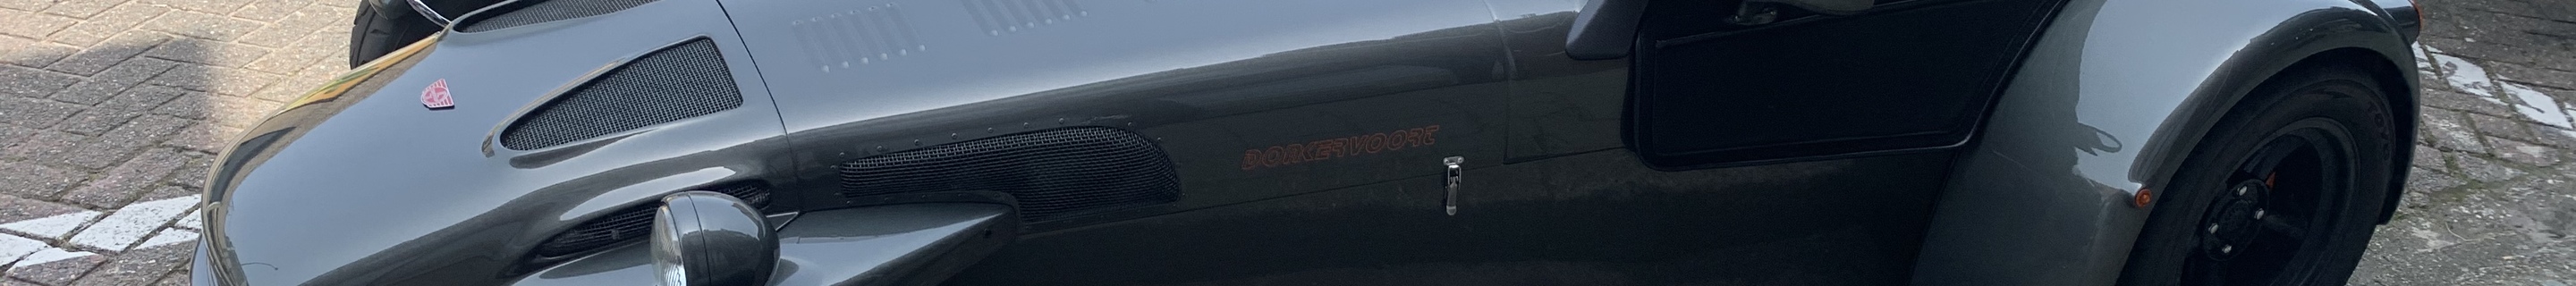 Donkervoort D8 270 RS